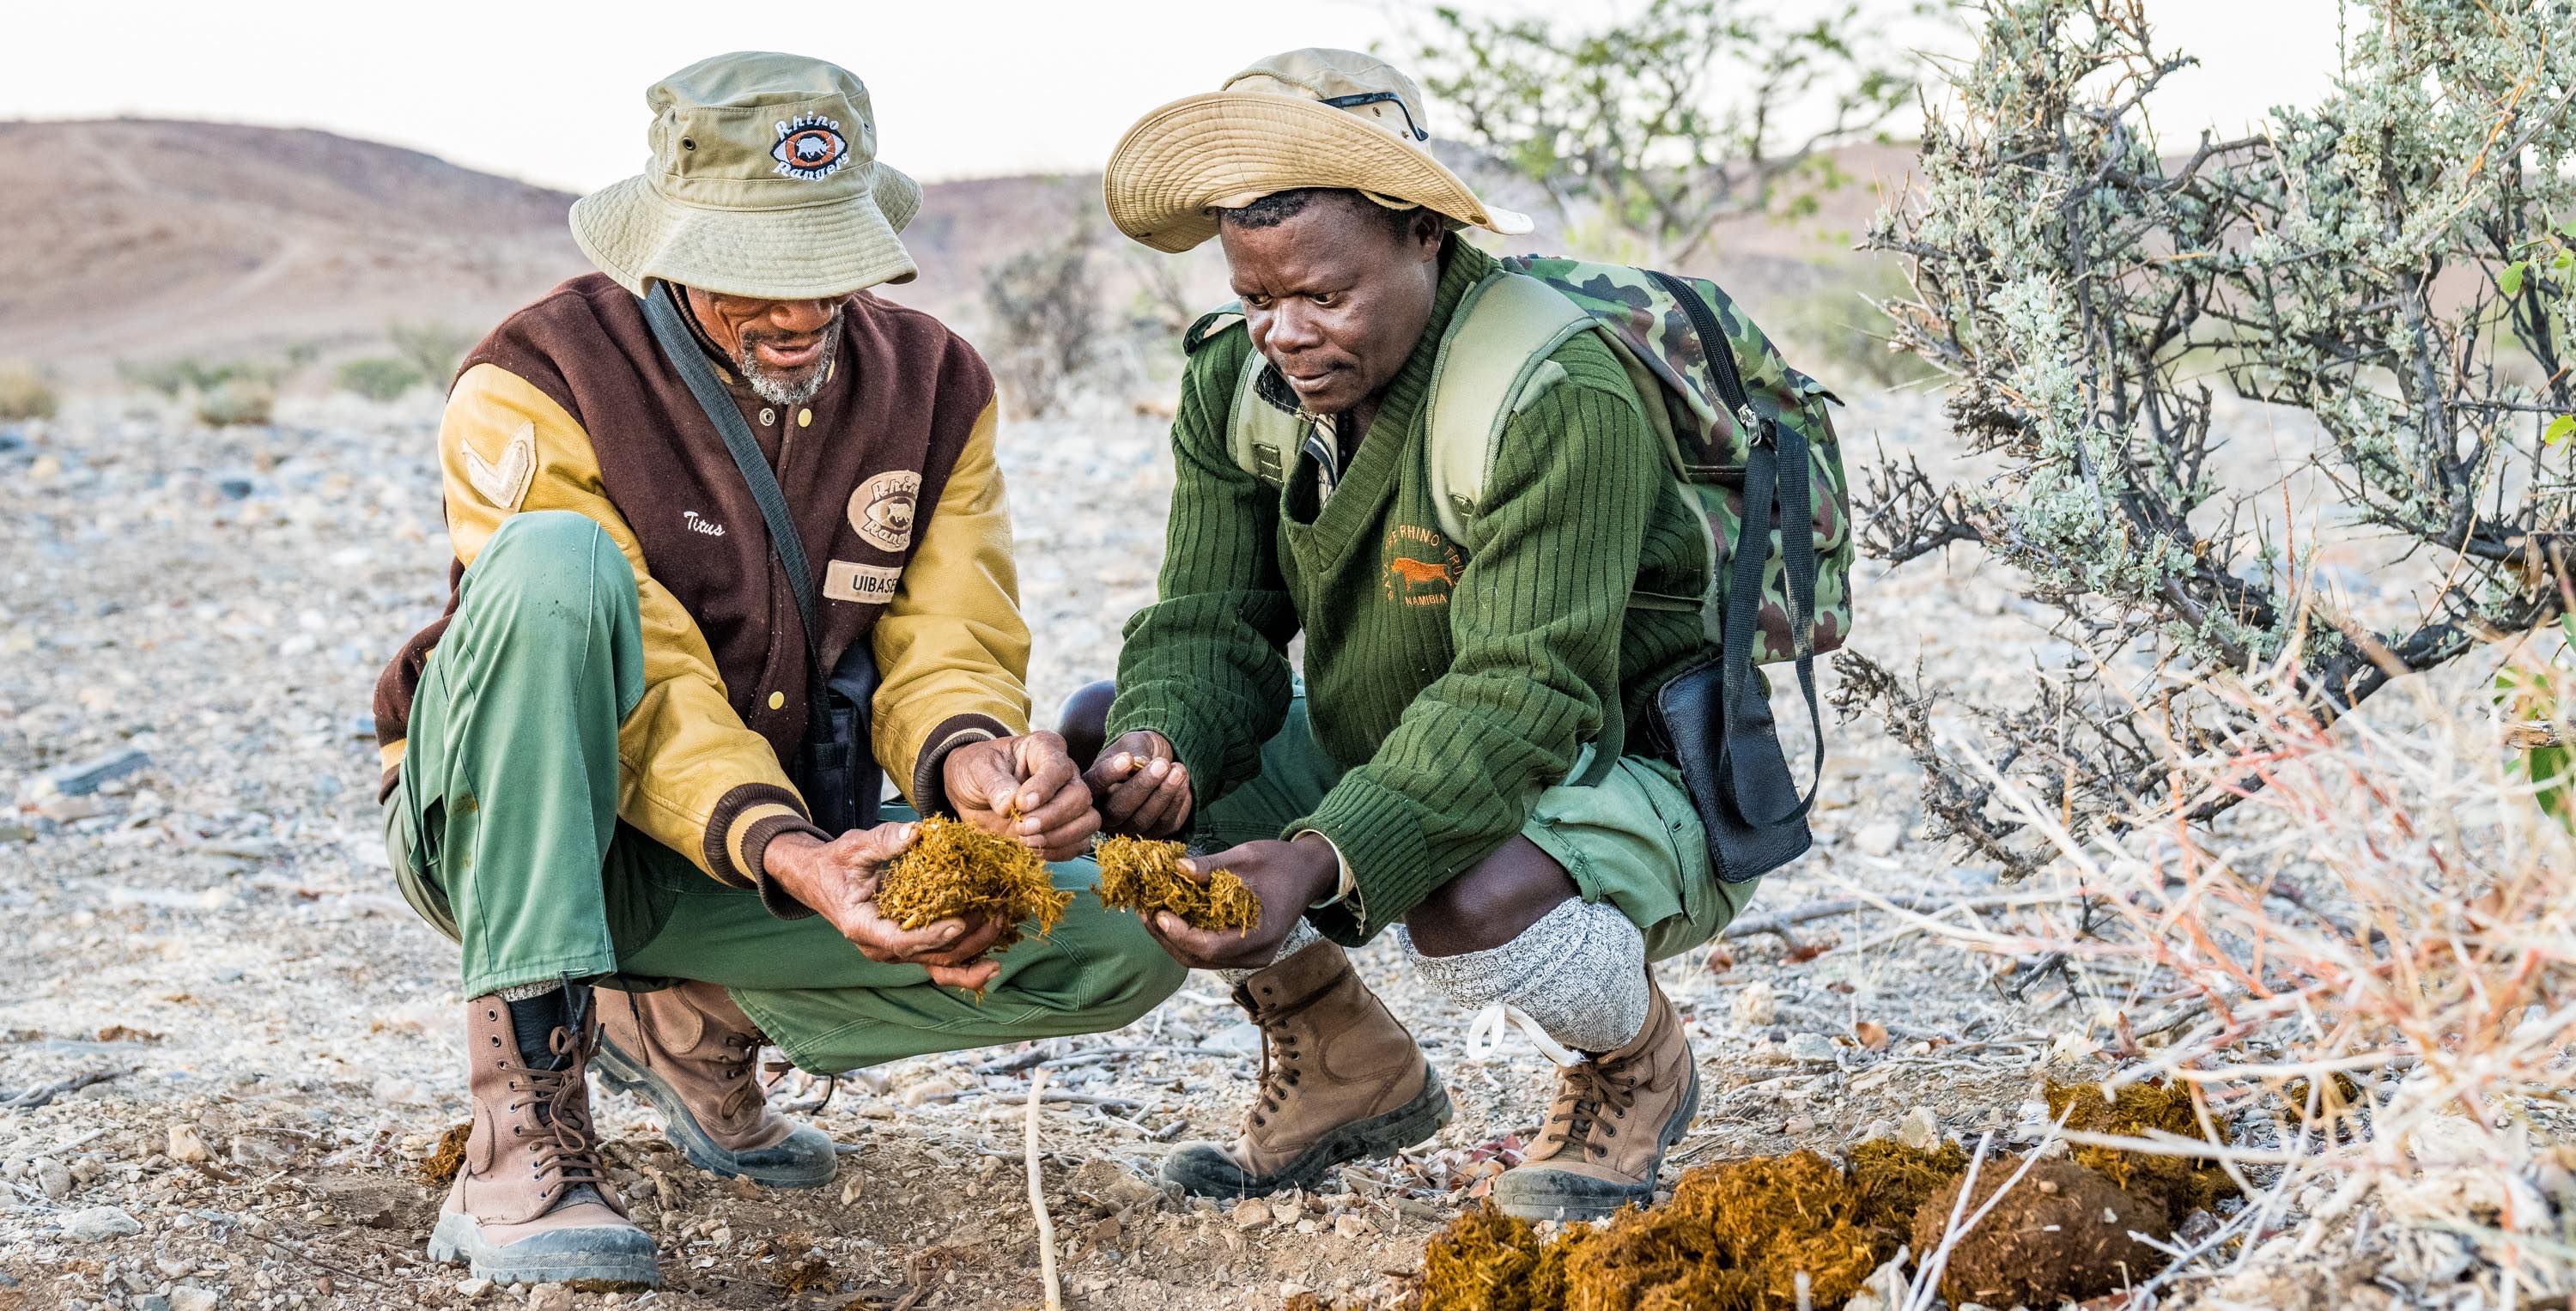 Two rangers examining rhino dung.